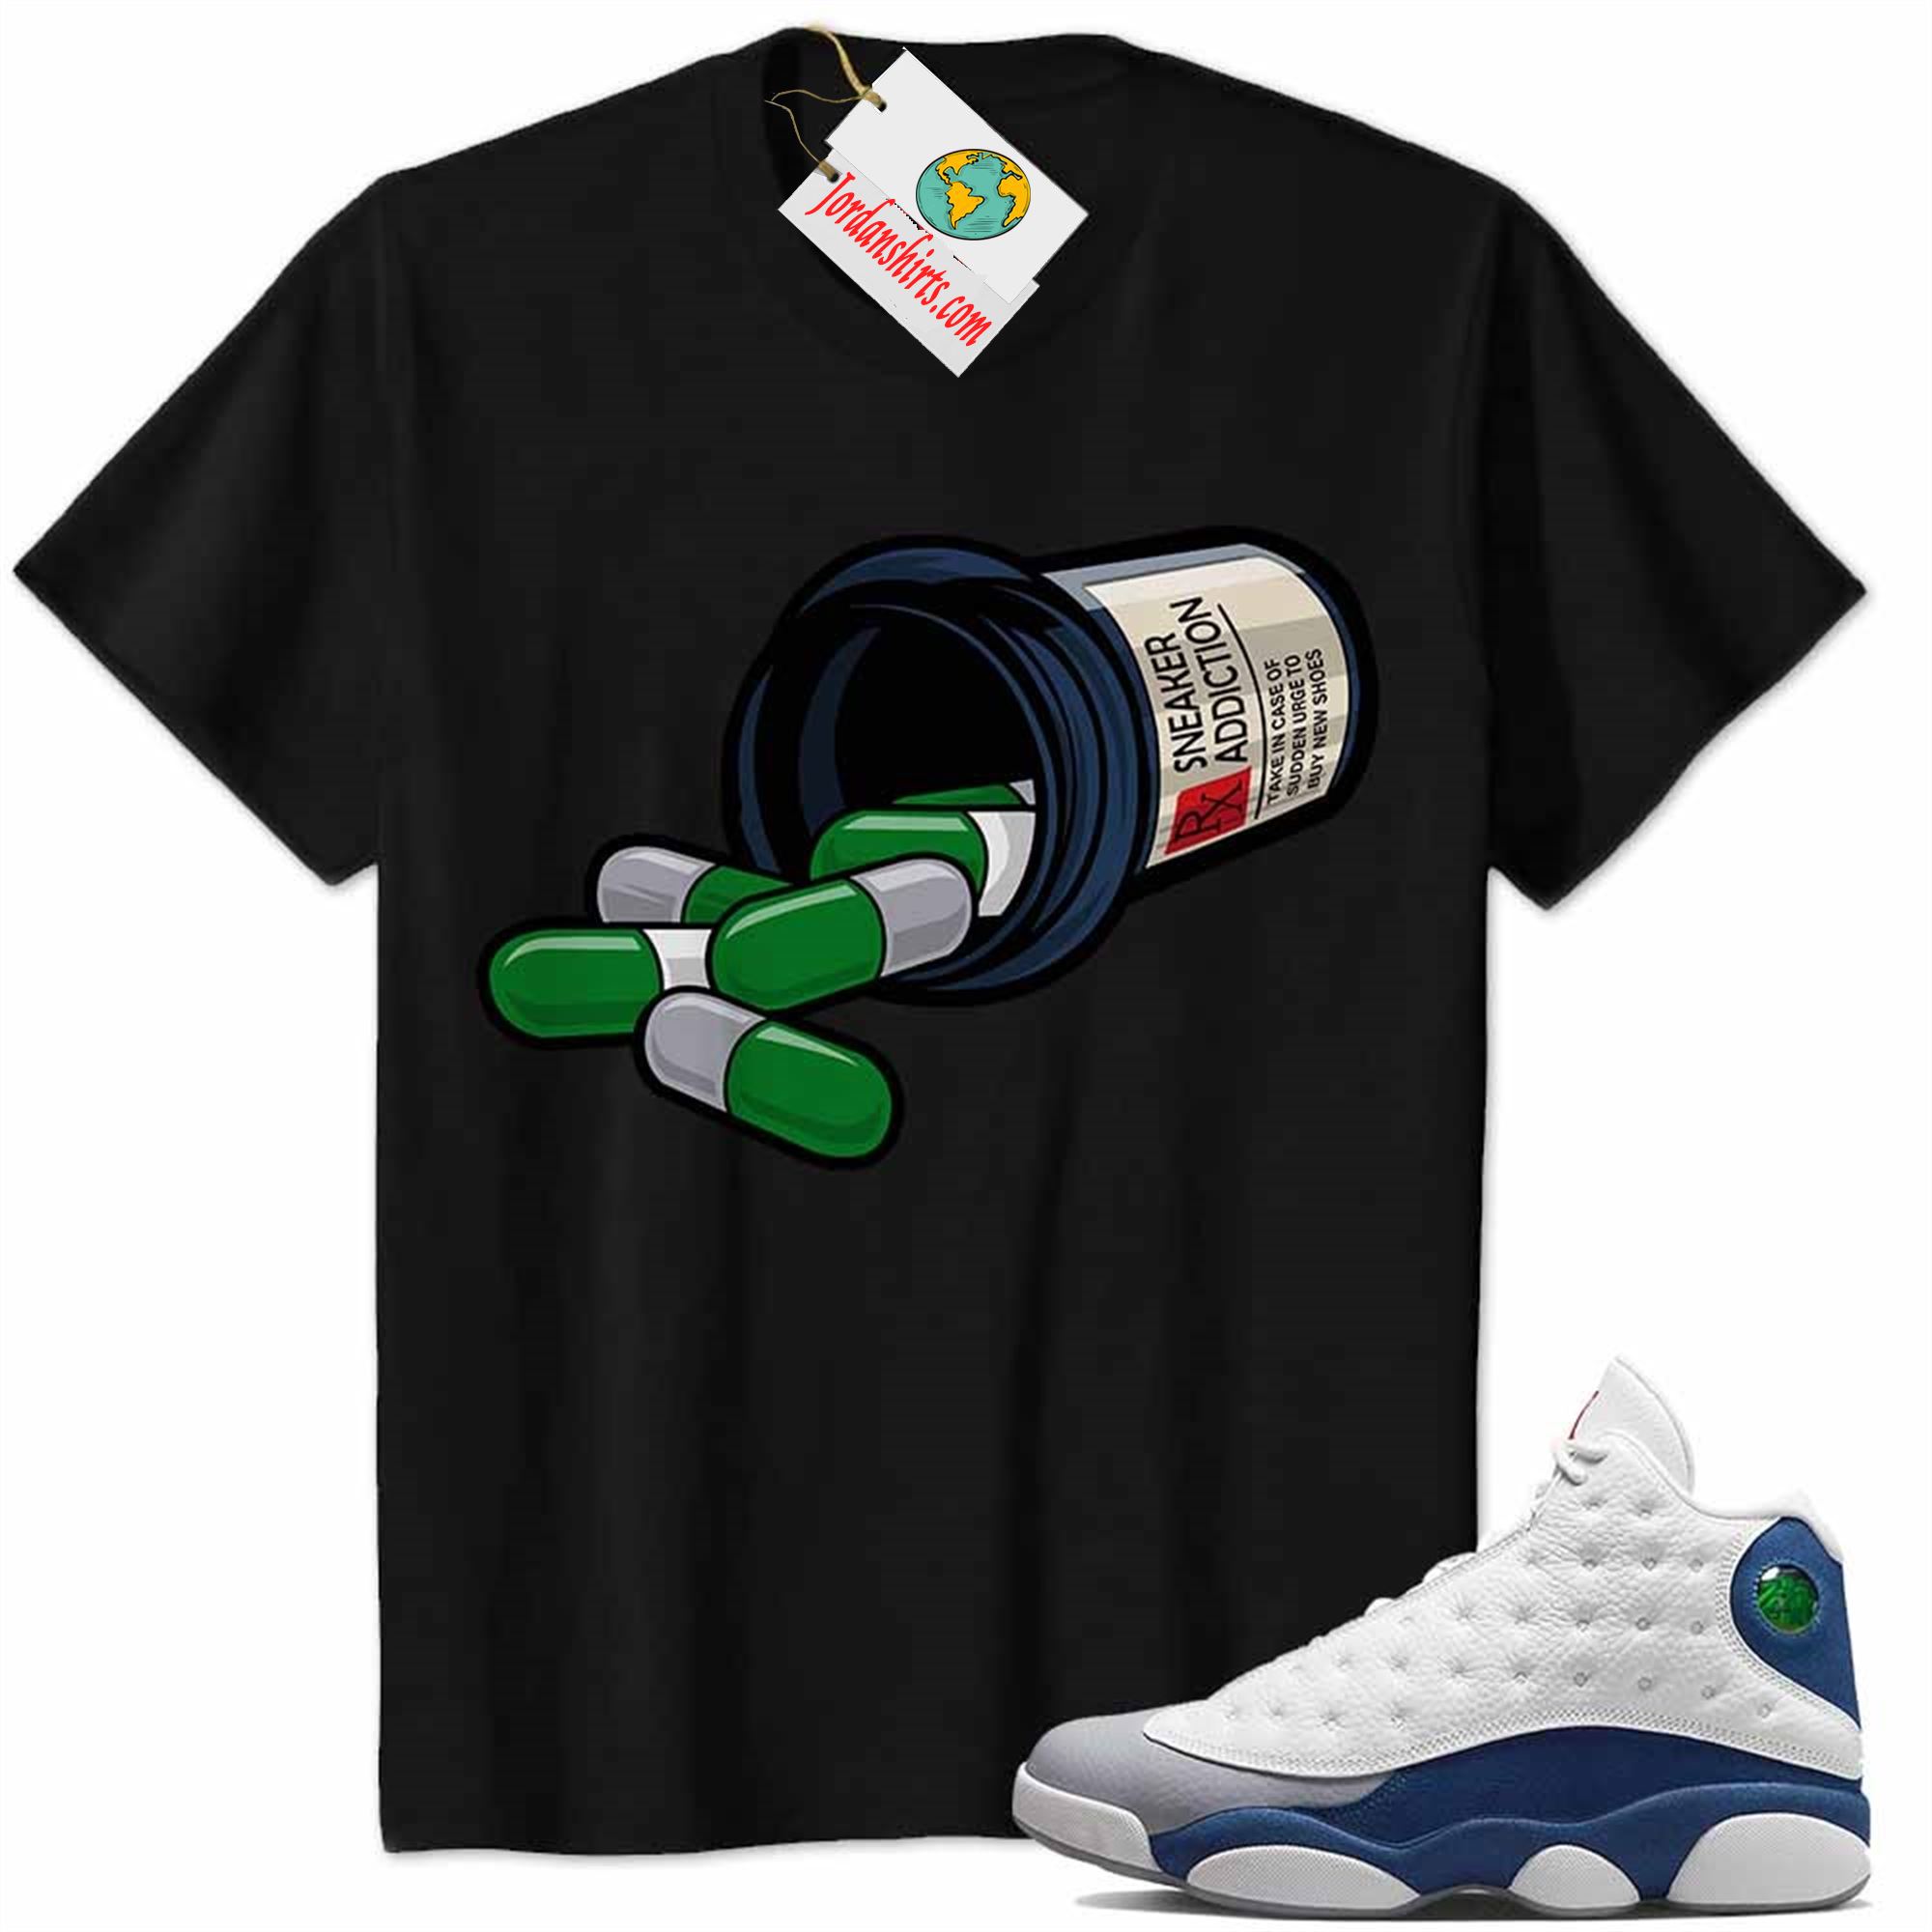 Jordan 13 Shirt, Jordan 13 French Blue Shirt Shirt Rx Drugs Pill Bottle Sneaker Addiction Black Full Size Up To 5xl